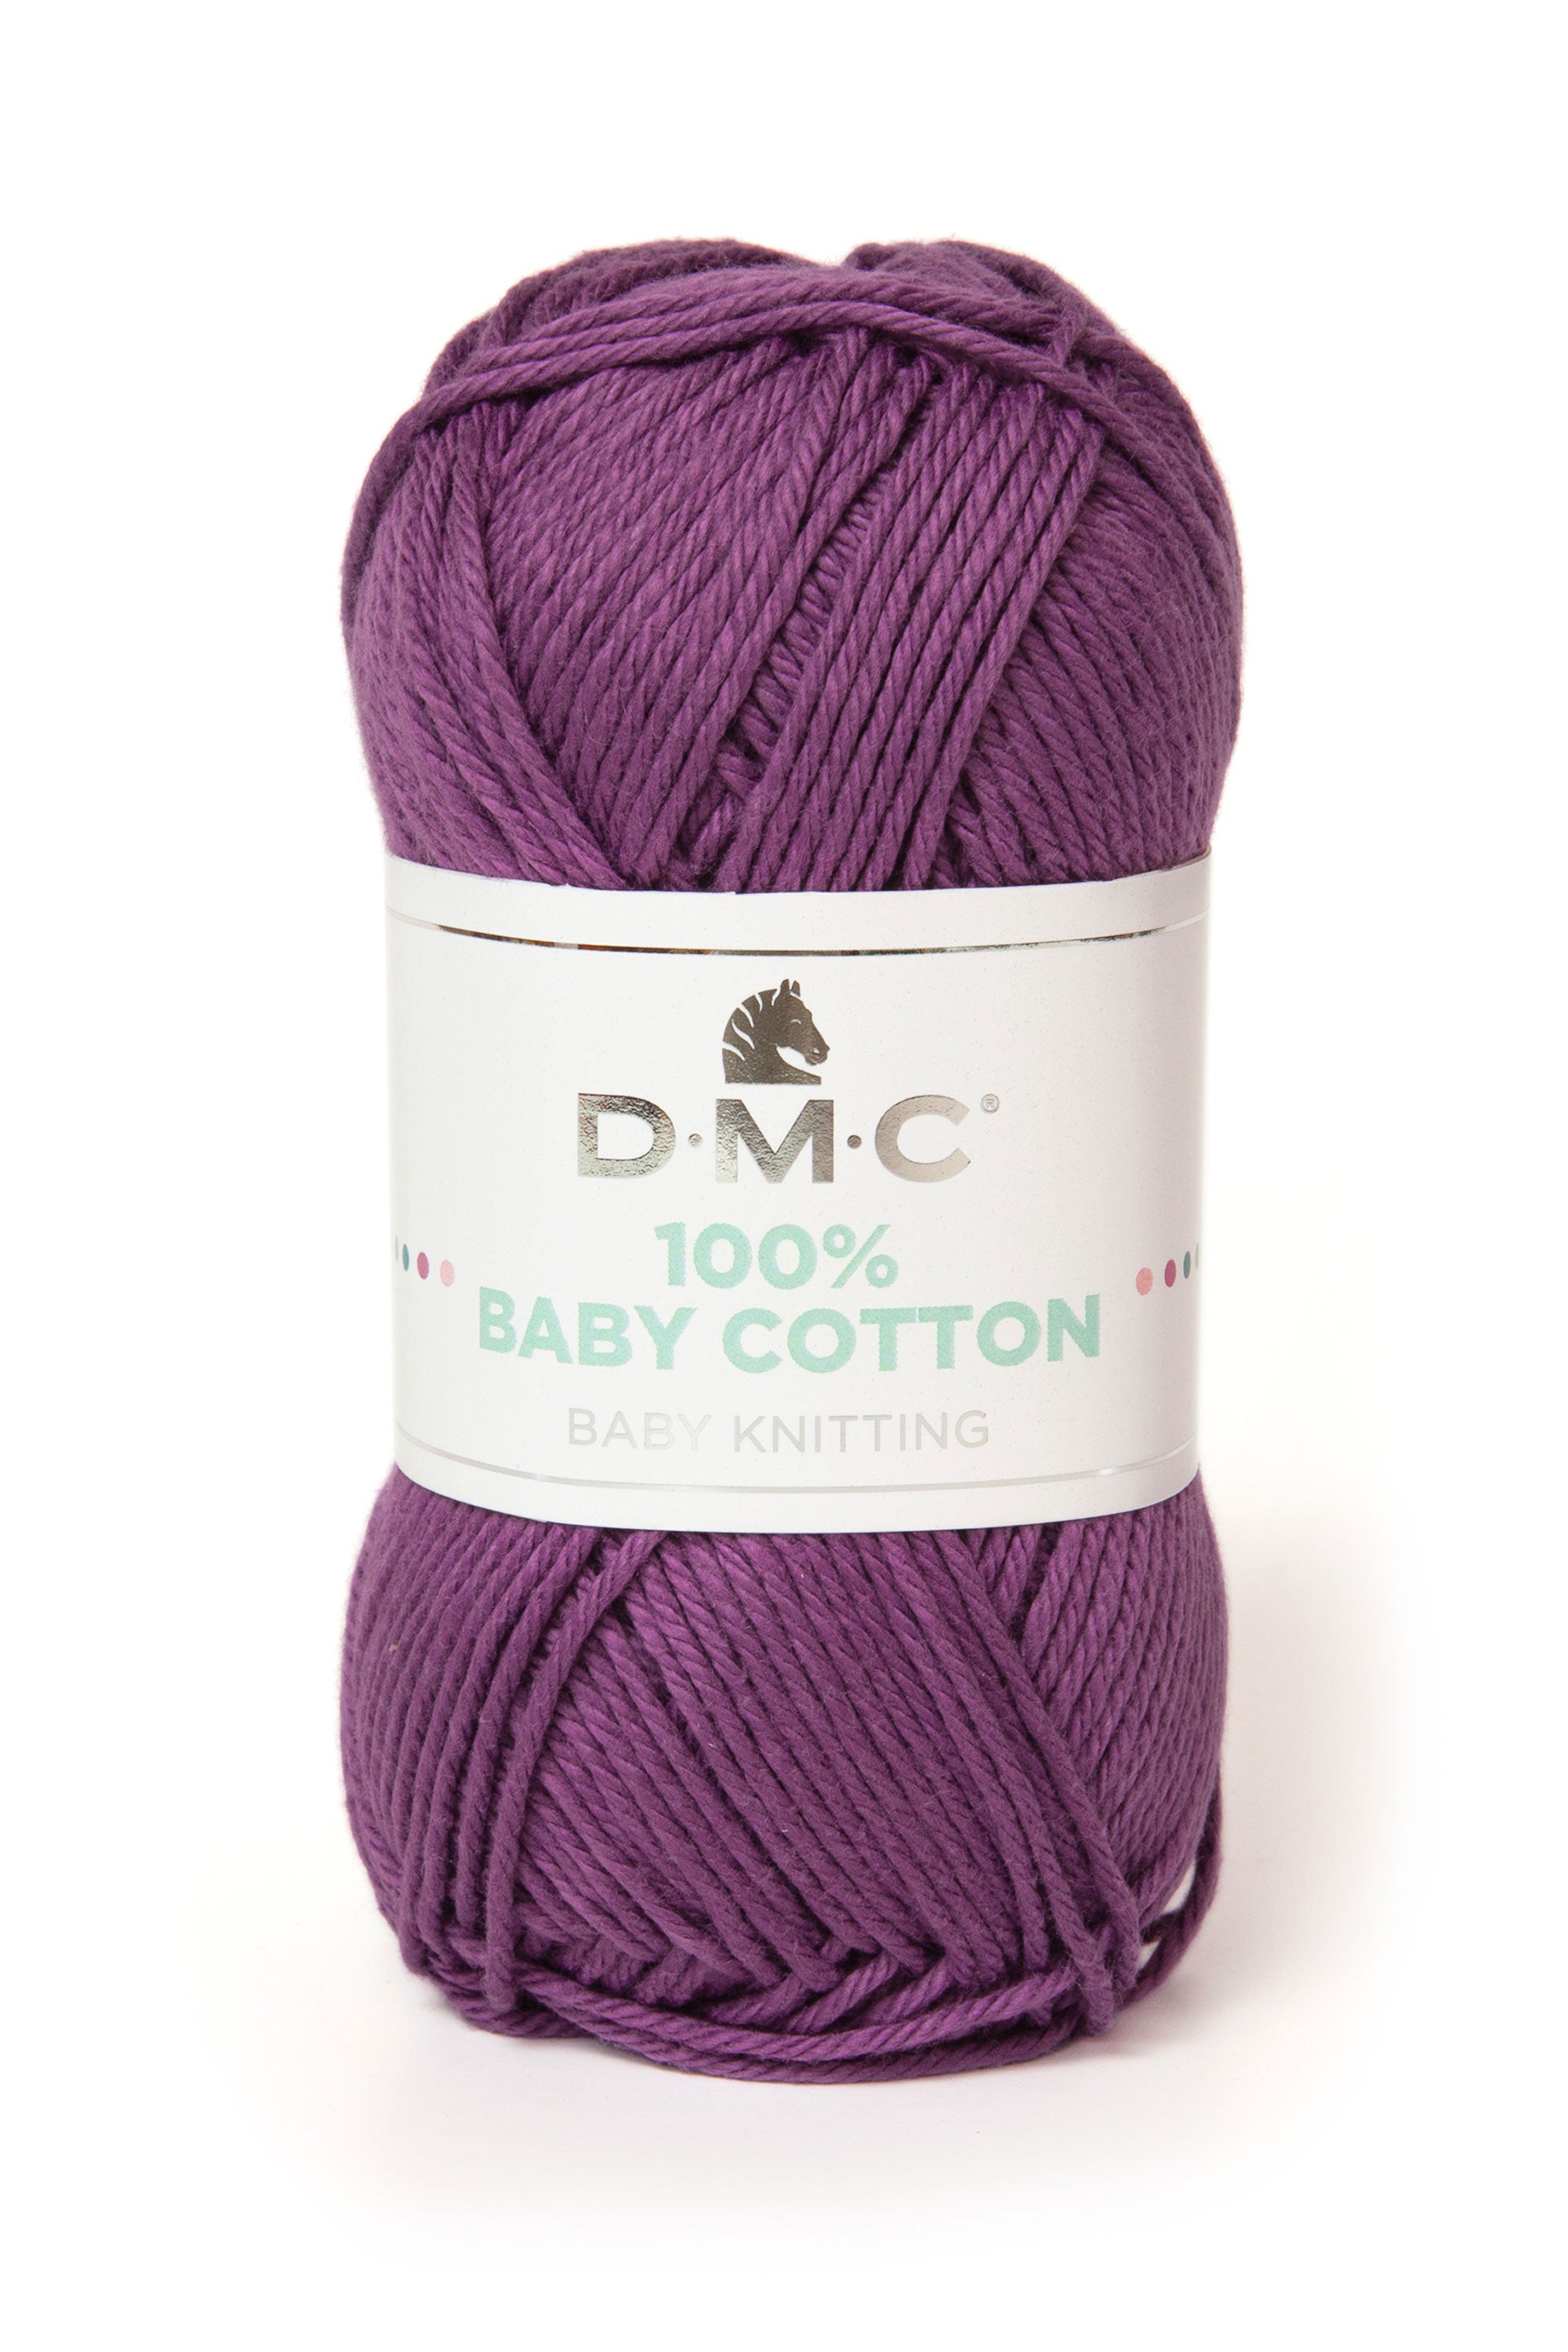 Lana Dmc 100% Baby Cotton Colore 756